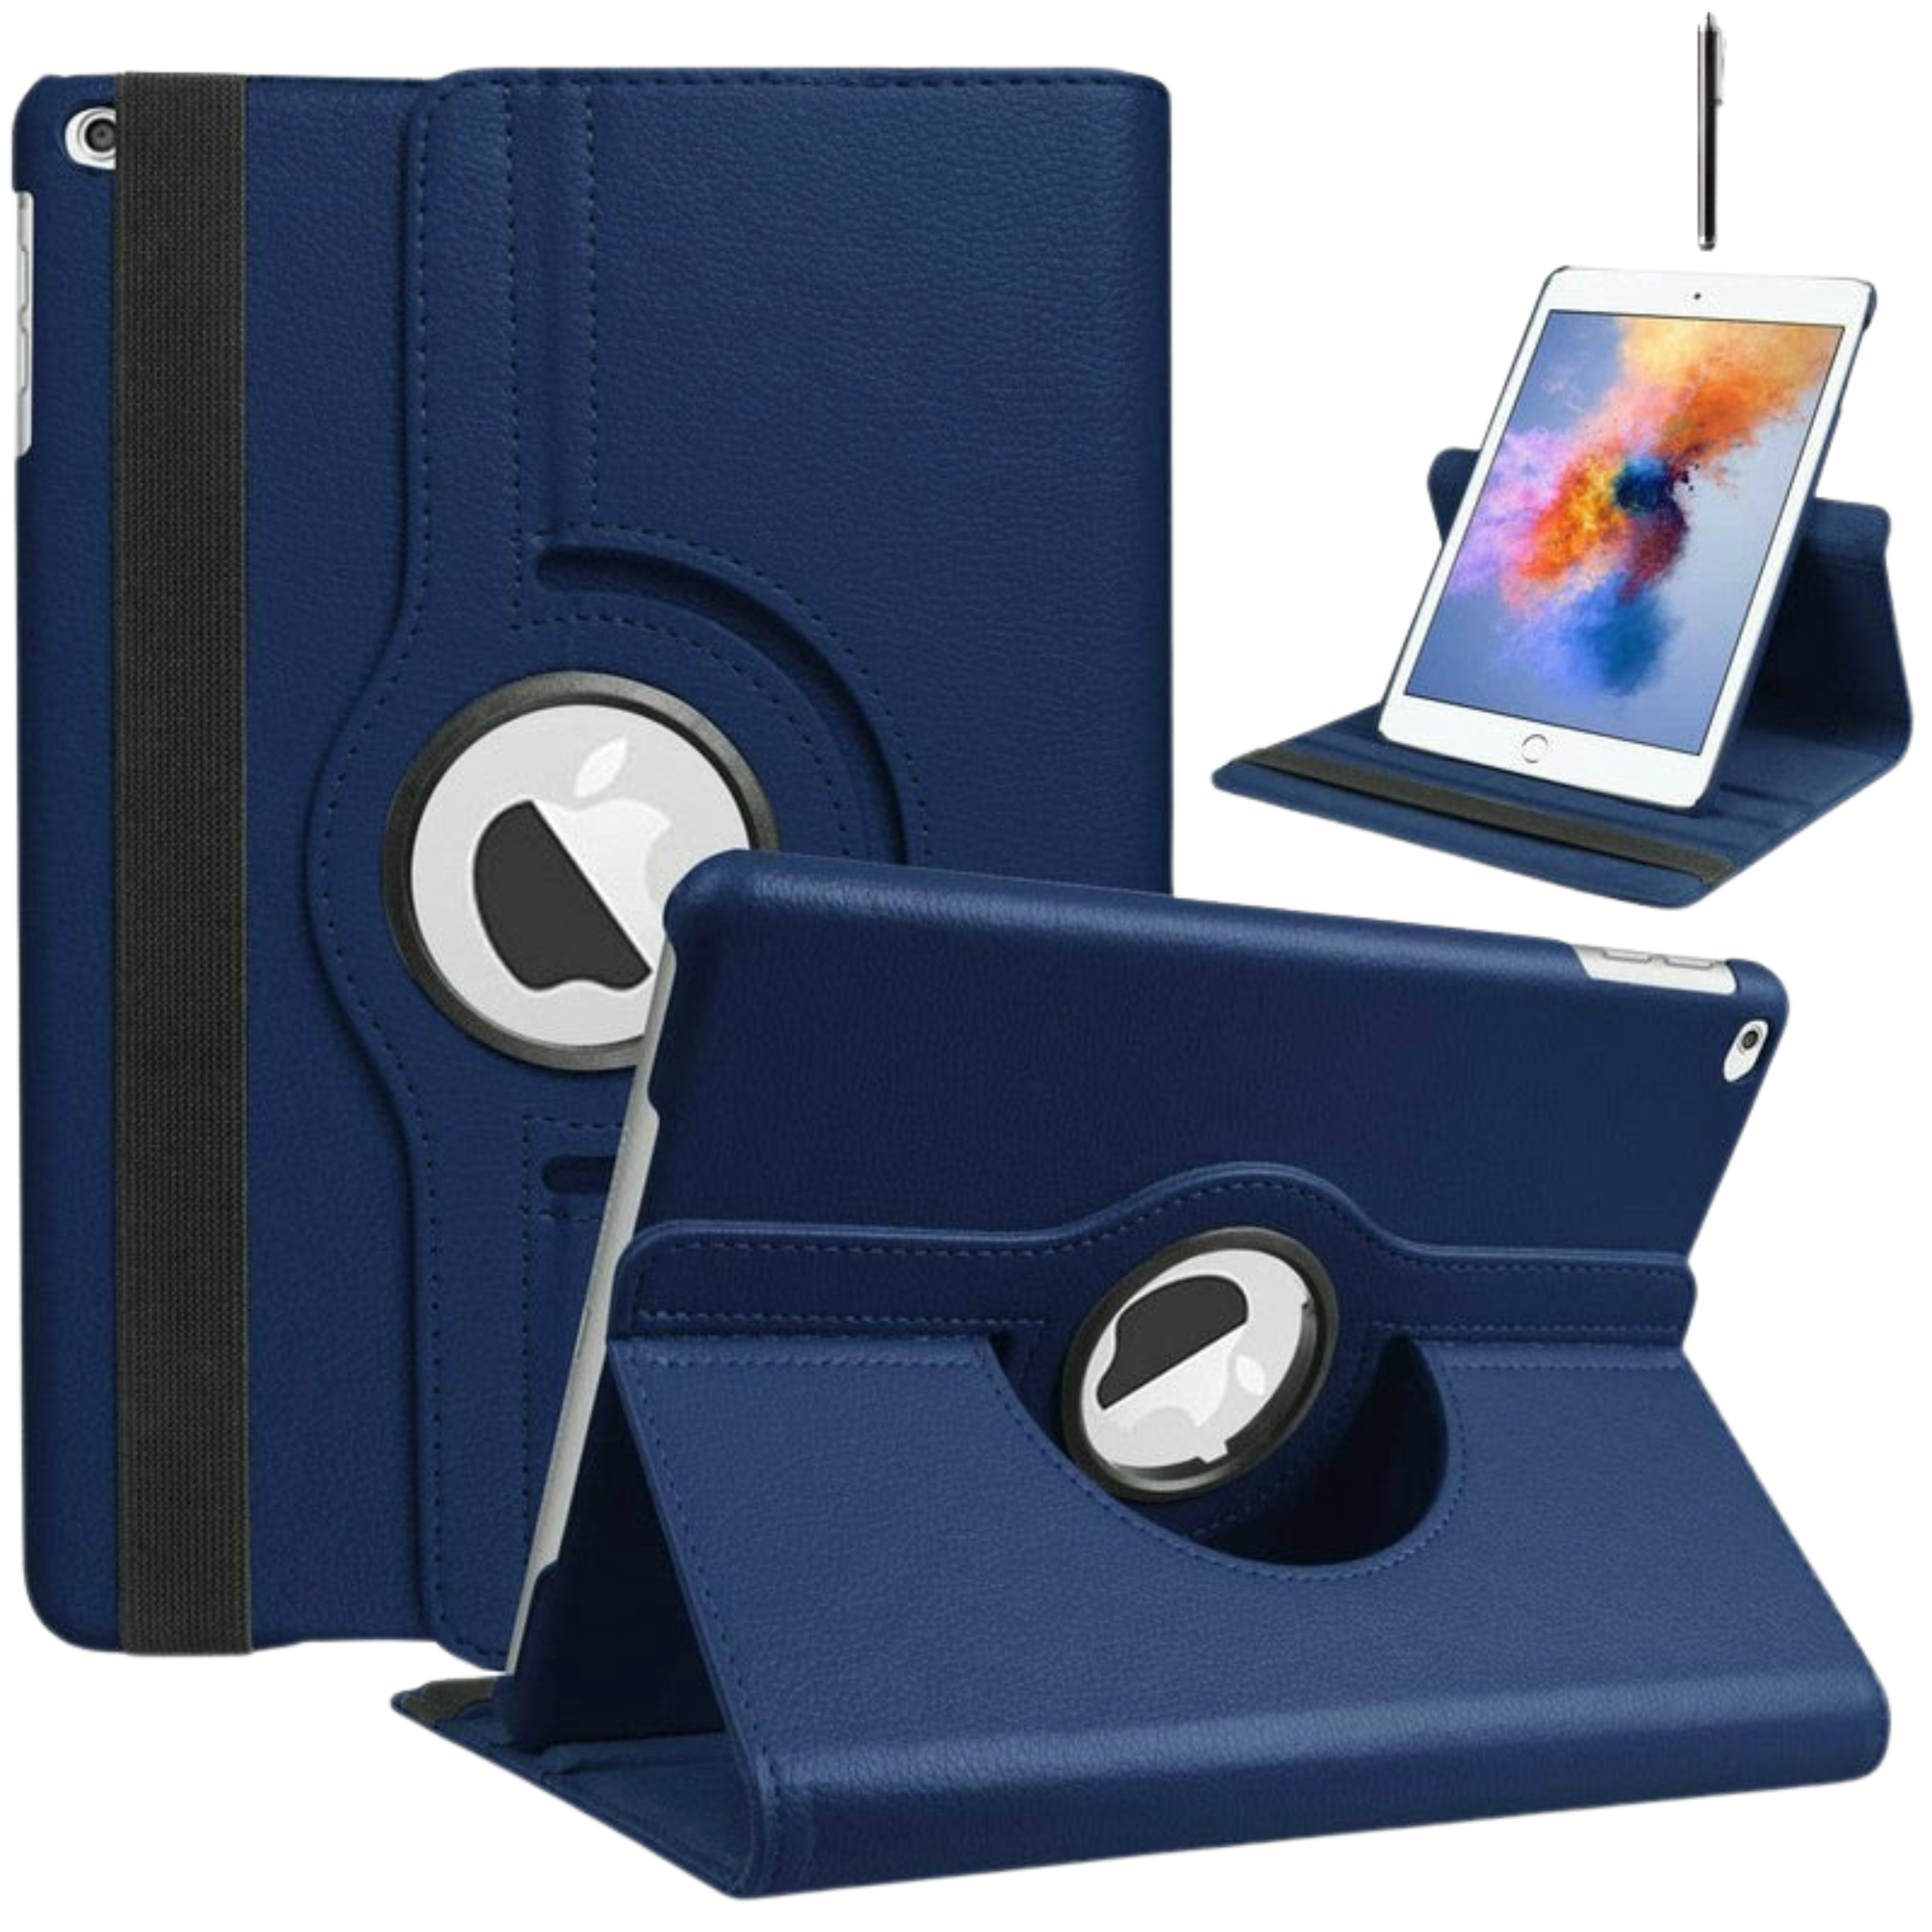 Premium iPad Smart Cover - Stilvolle und funktionale 360° drehbare Leder-Tablet-Hülle